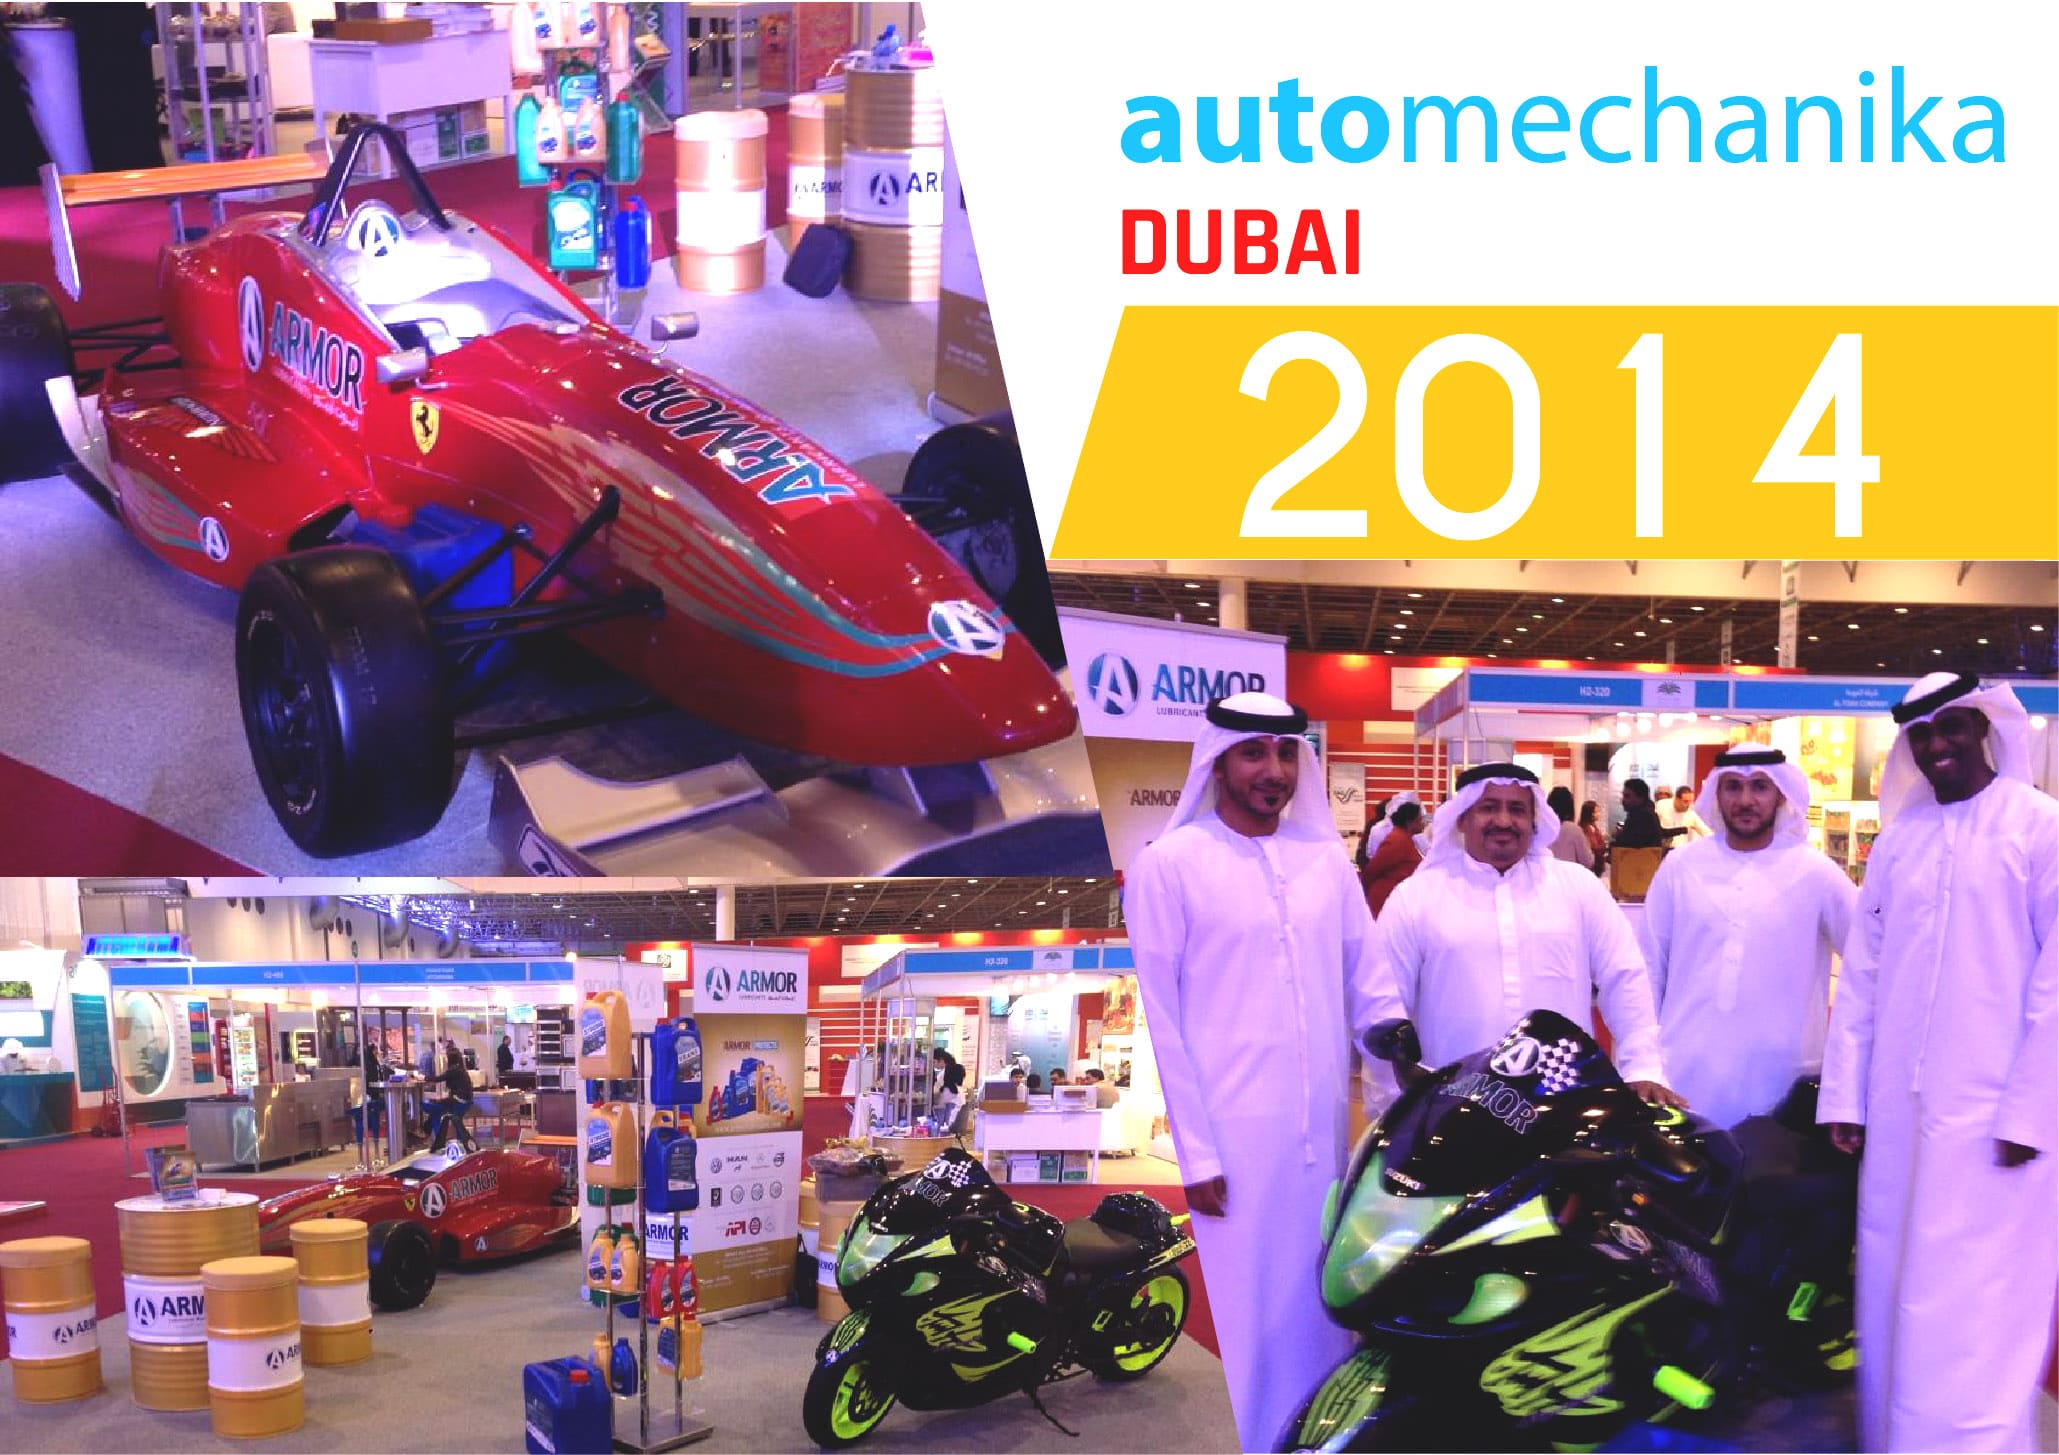 Armor Lubricants Dubai 2014 Automechanika Exhibition Participation Image